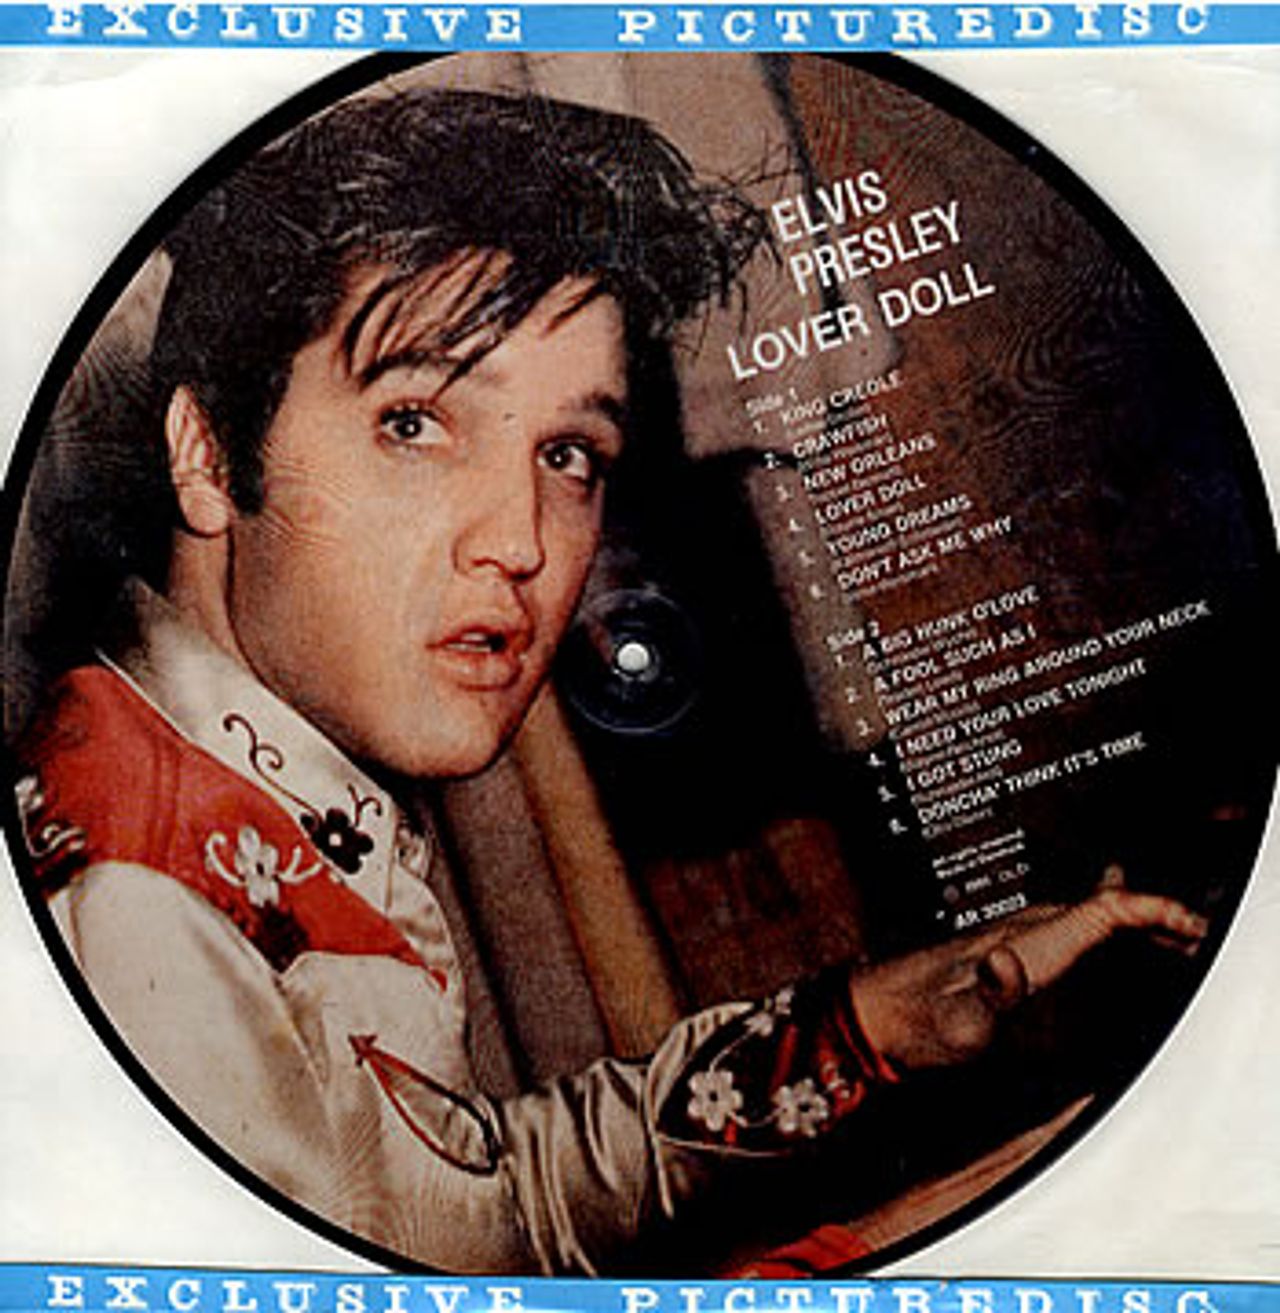 Elvis Presley Lover Doll Danish Picture disc LP — RareVinyl.com